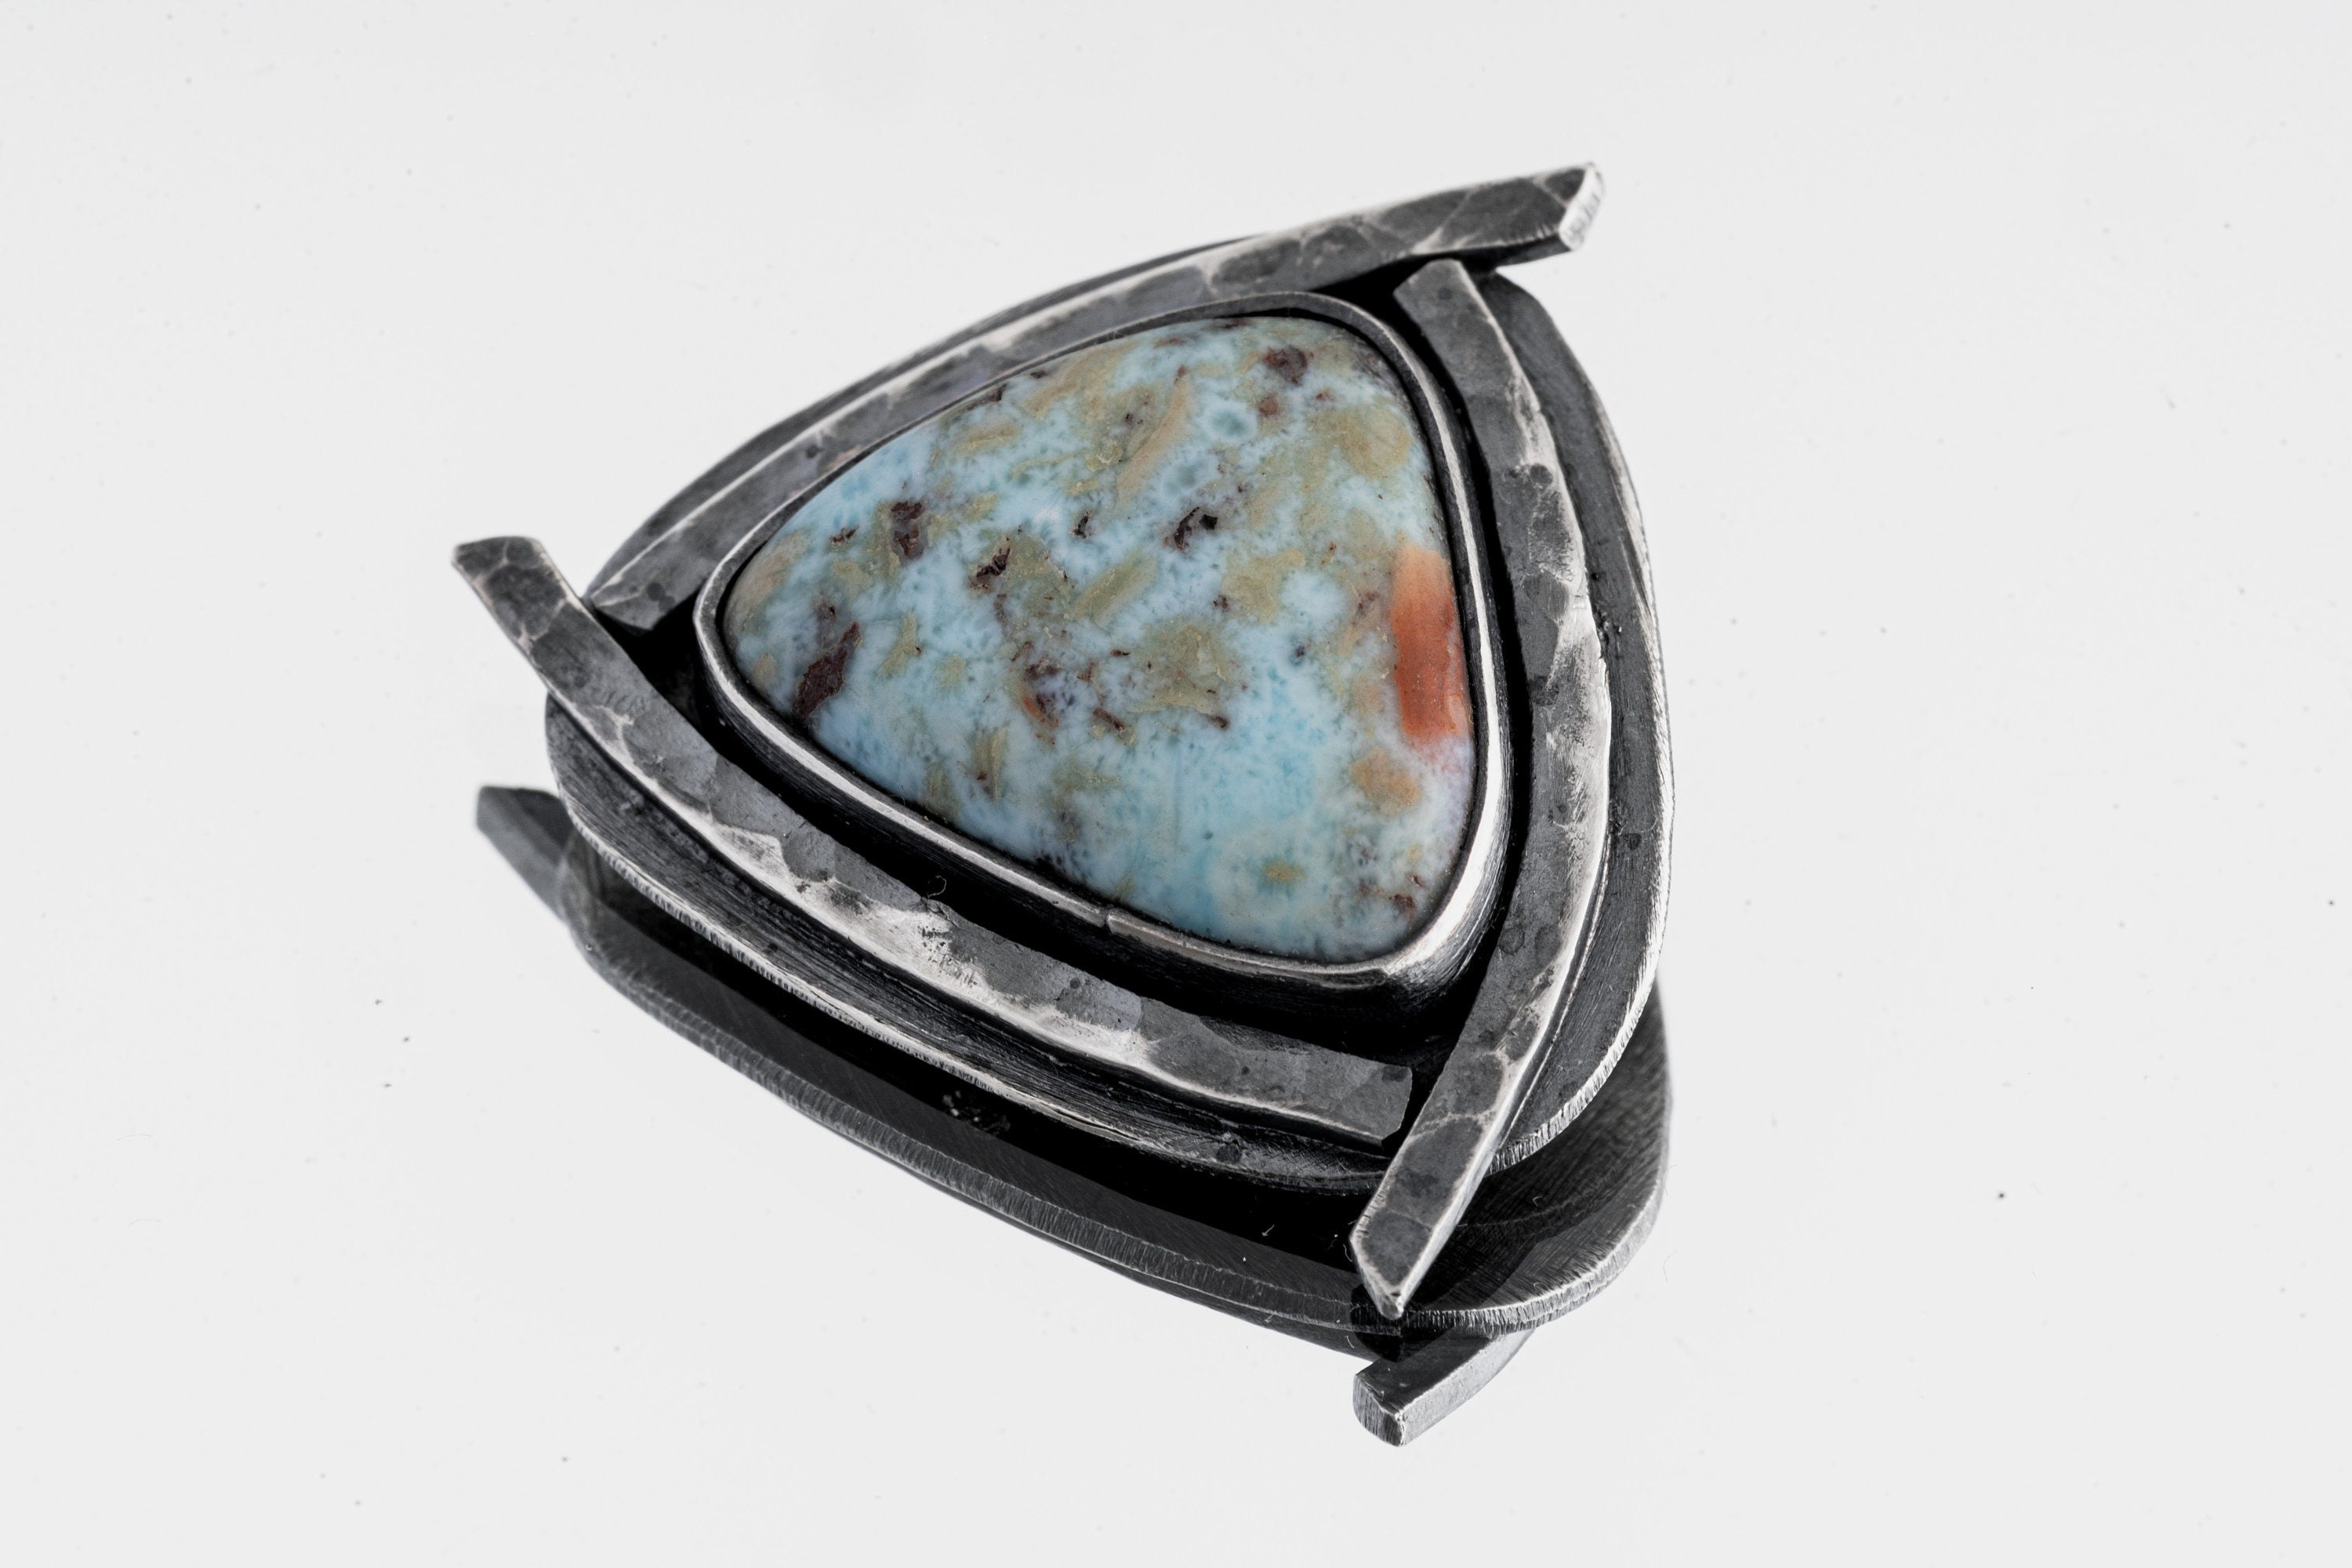 Azure Triad Whisper - Larimar - Stack Pendant - Textured & oxidised - 925 Sterling Silver - Crystal Pendant